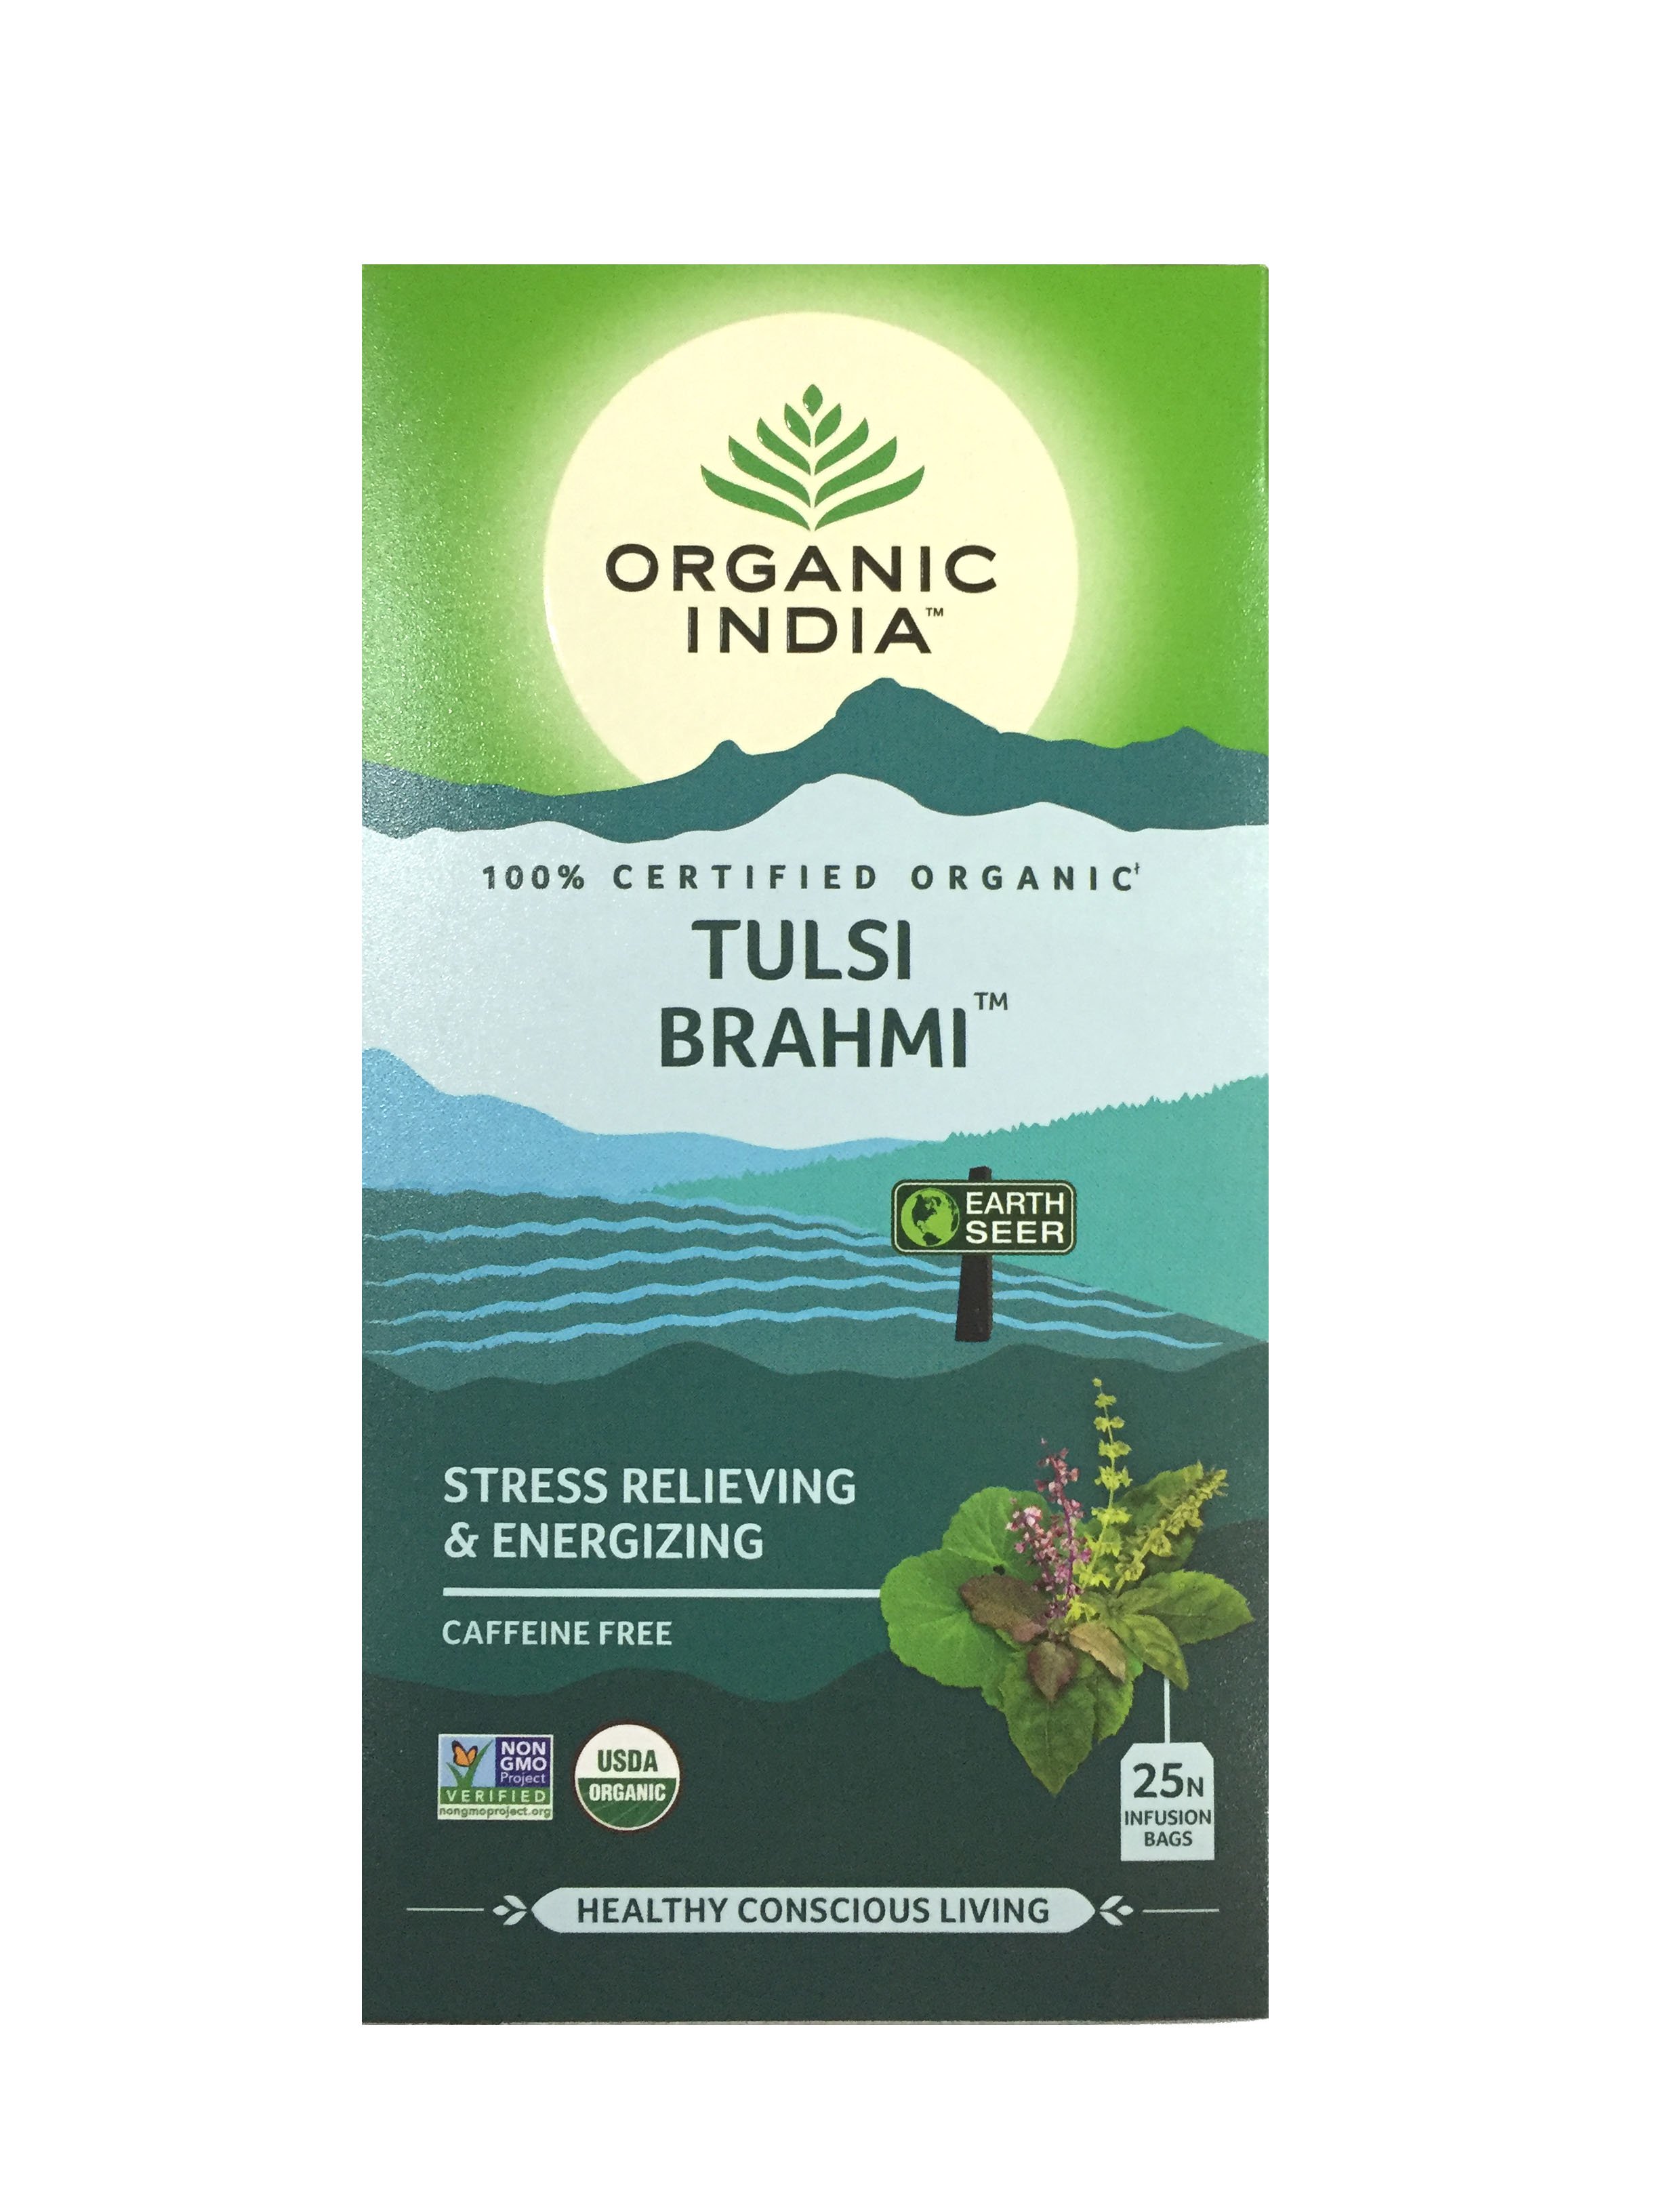 Buy Organic India Tulsi Brahmi Tea at Best Price Online